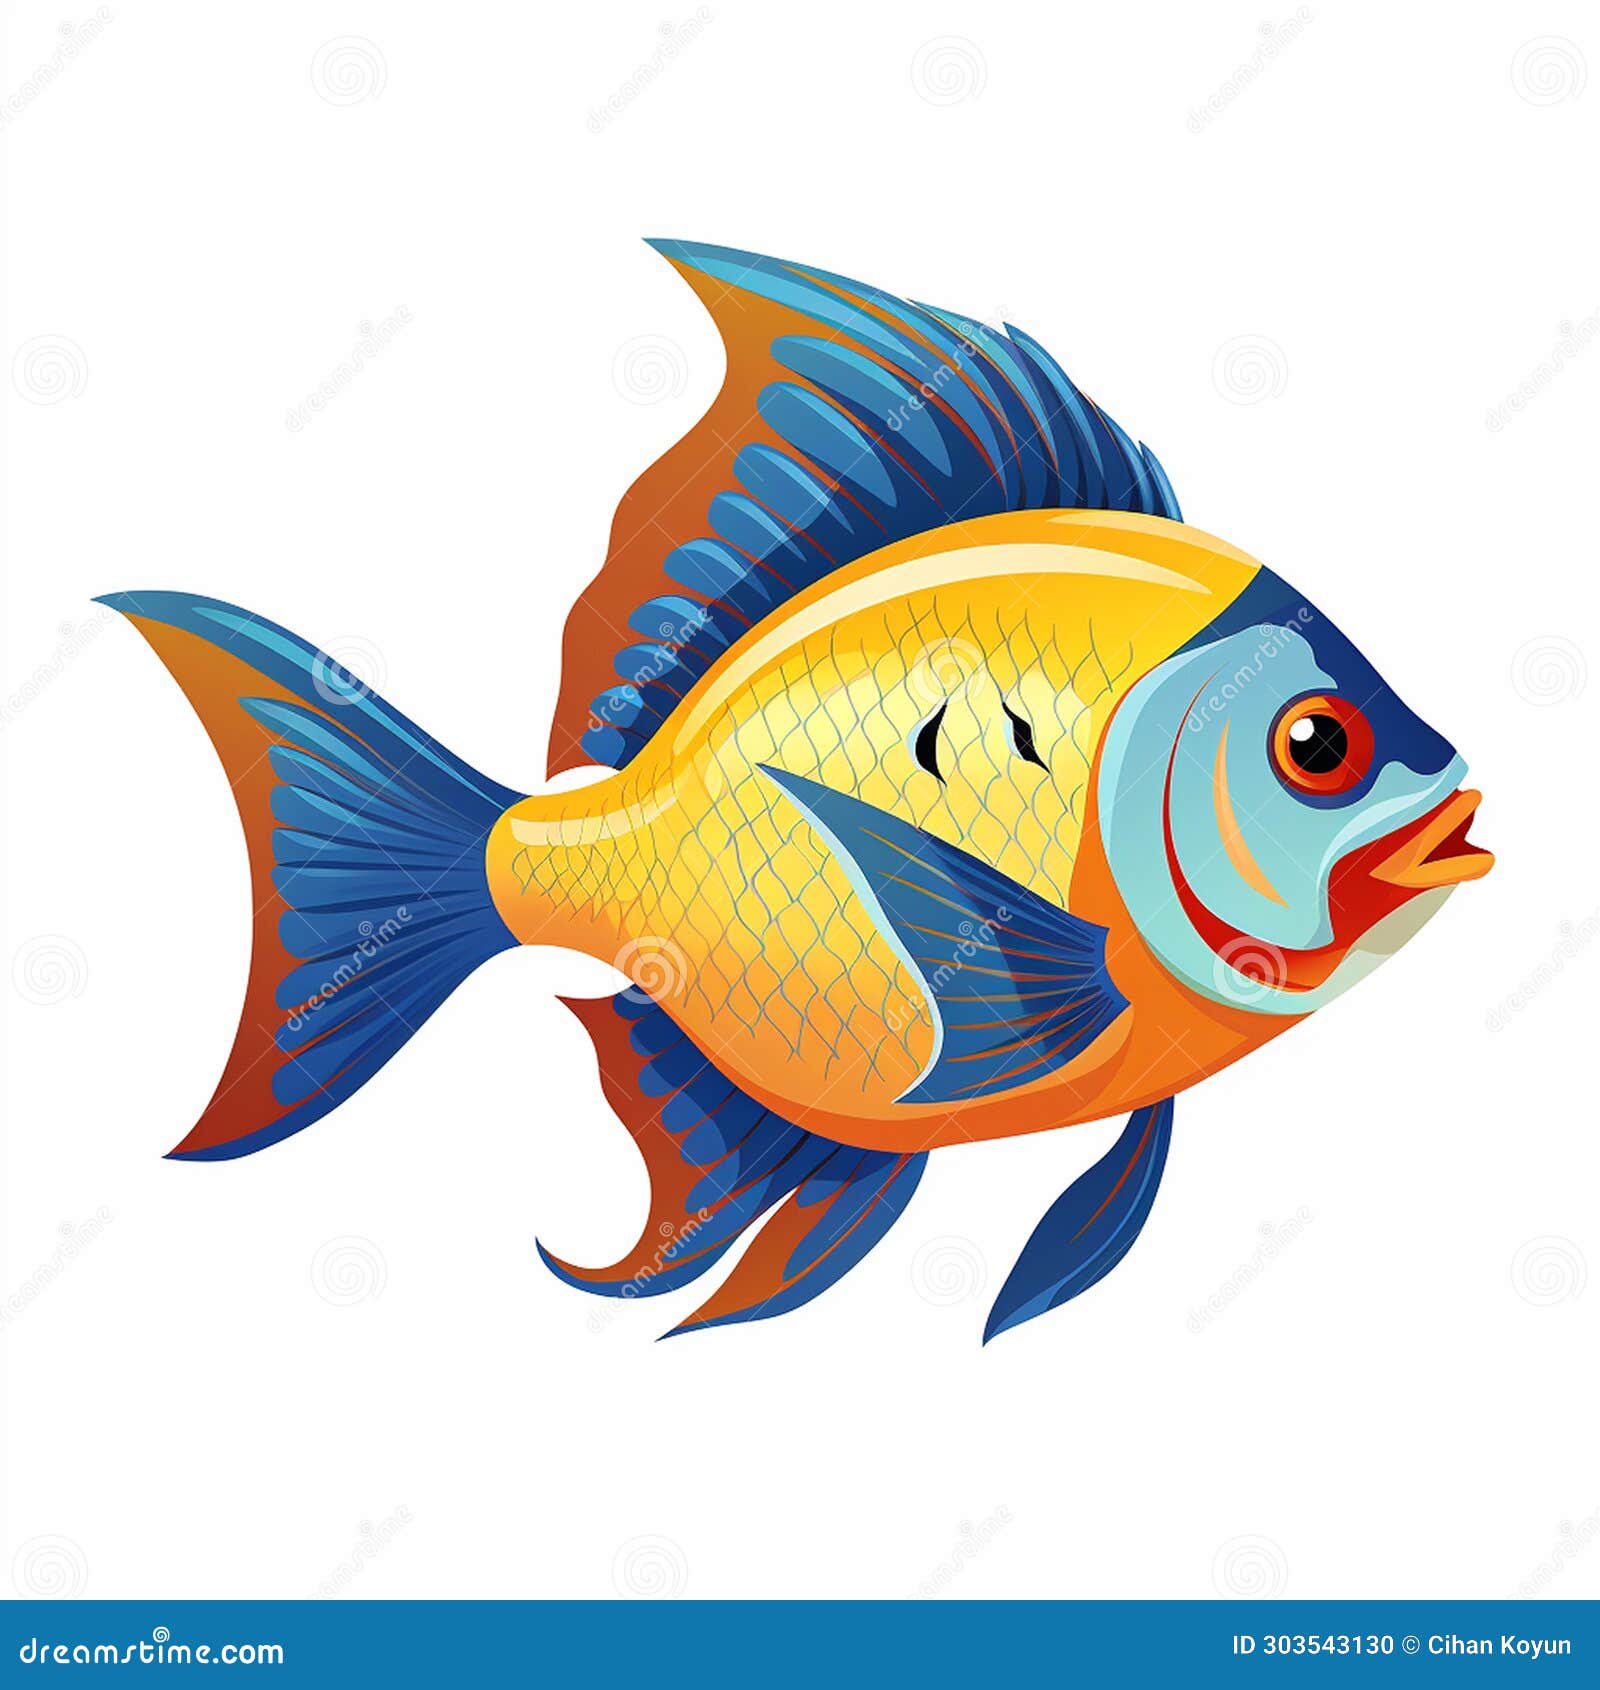 fish bone  orange koi carp dorado blood red parrot fish yellow cichlid fish bi color betta